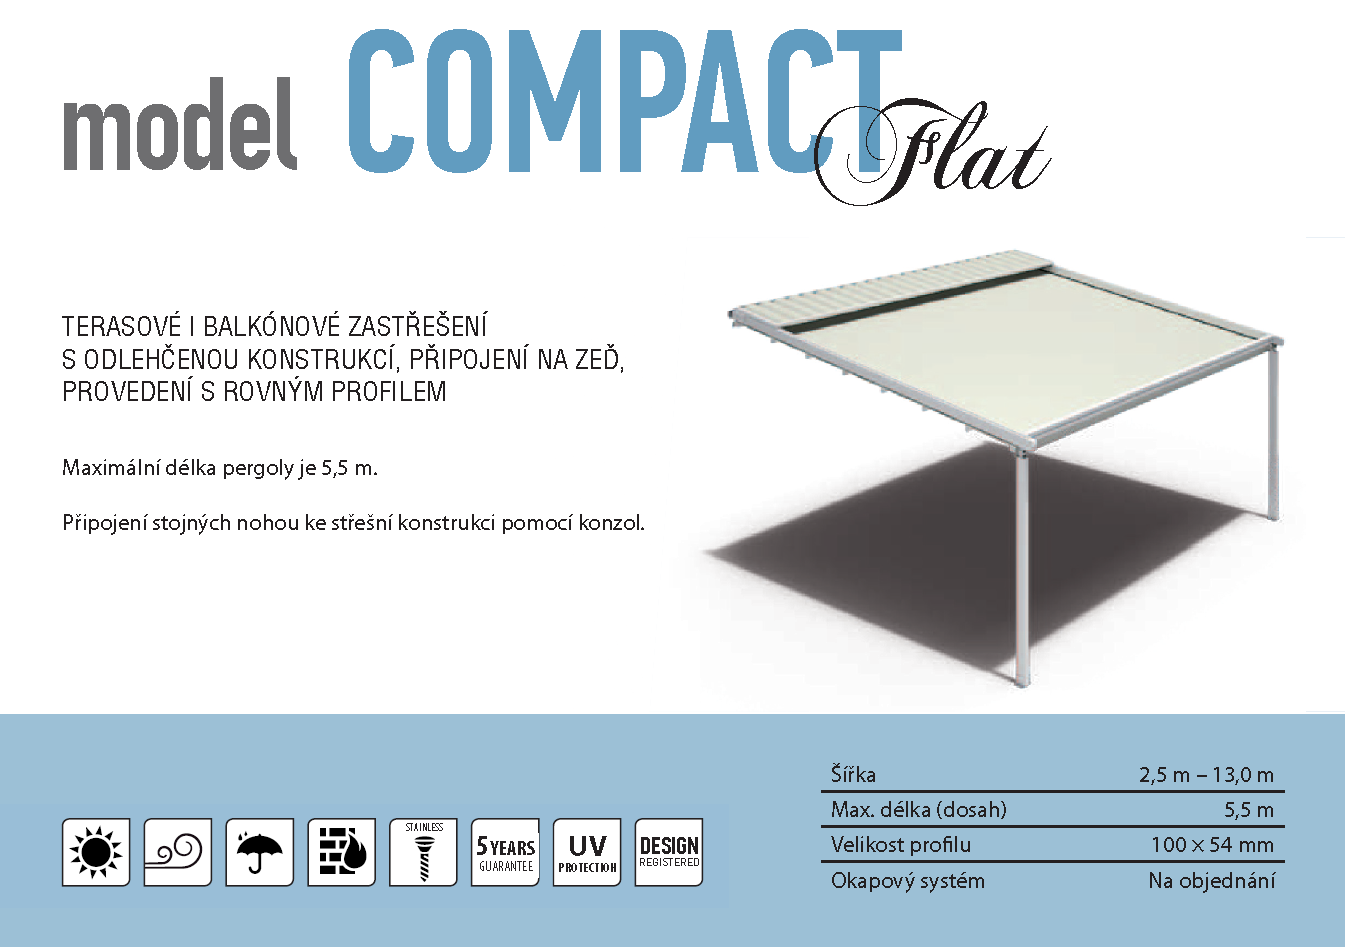 compact flat